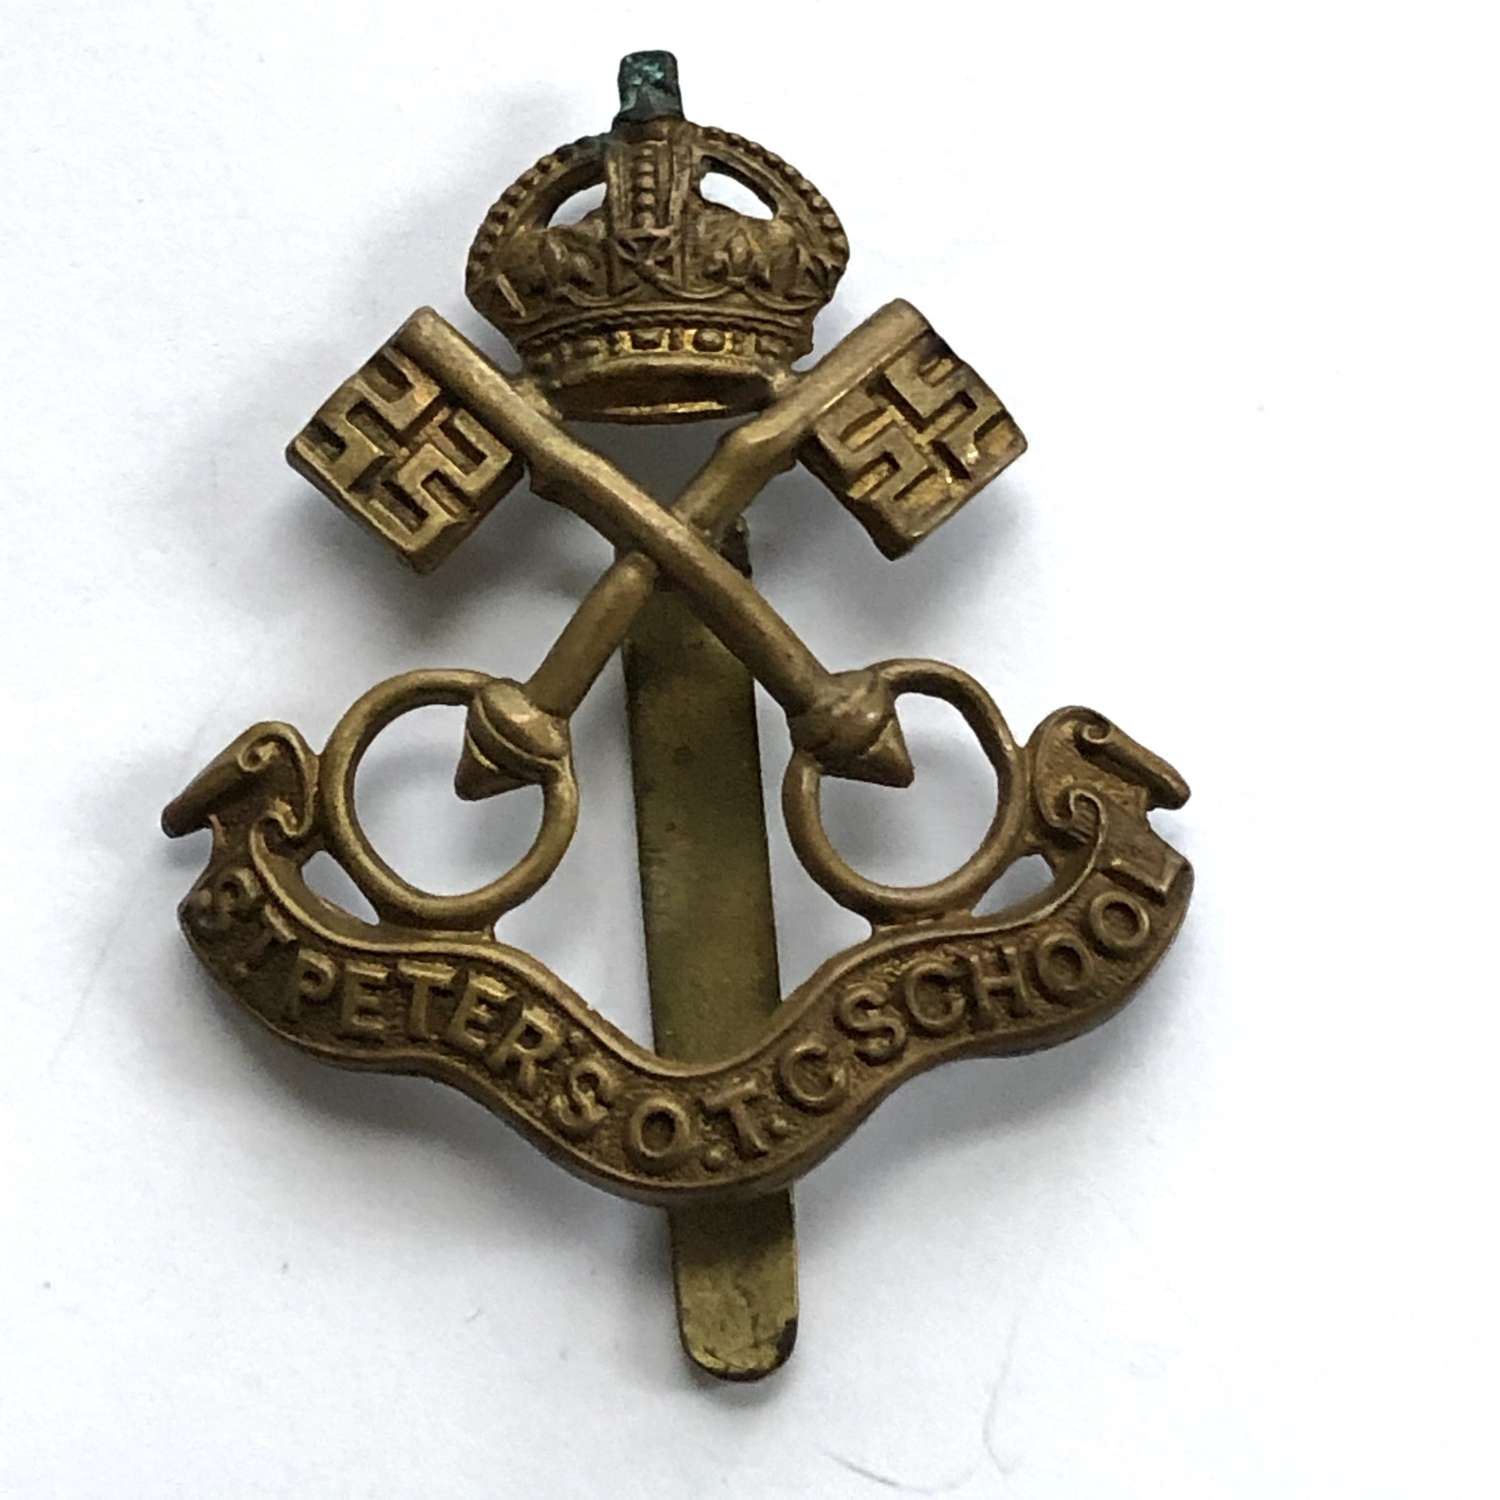 St. Peter's School OTC, York 2nd pattern cap badge